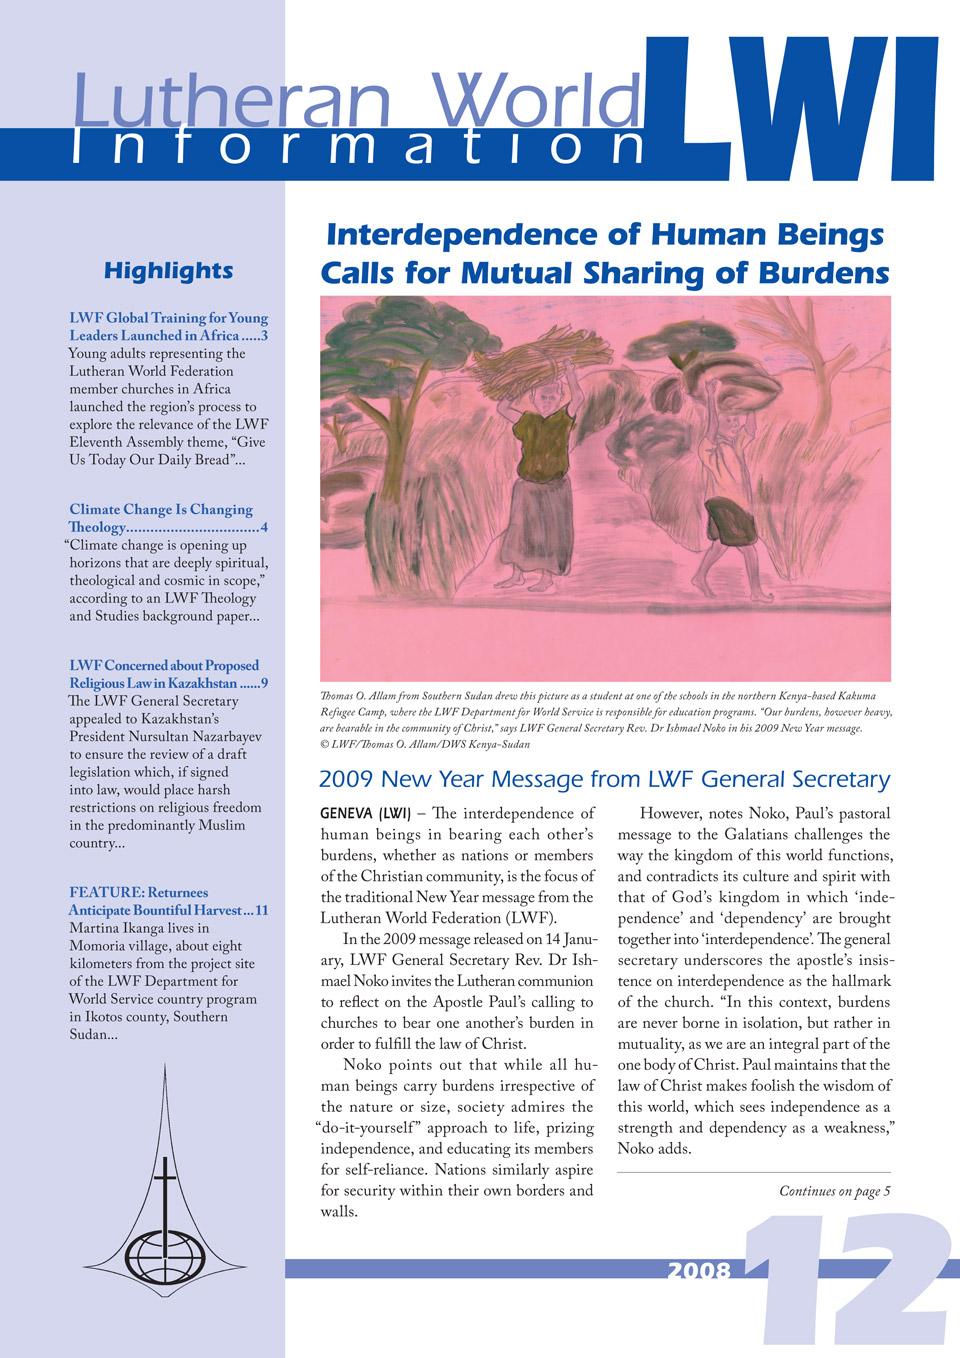 Lutheran World Information PDF edition - 2008